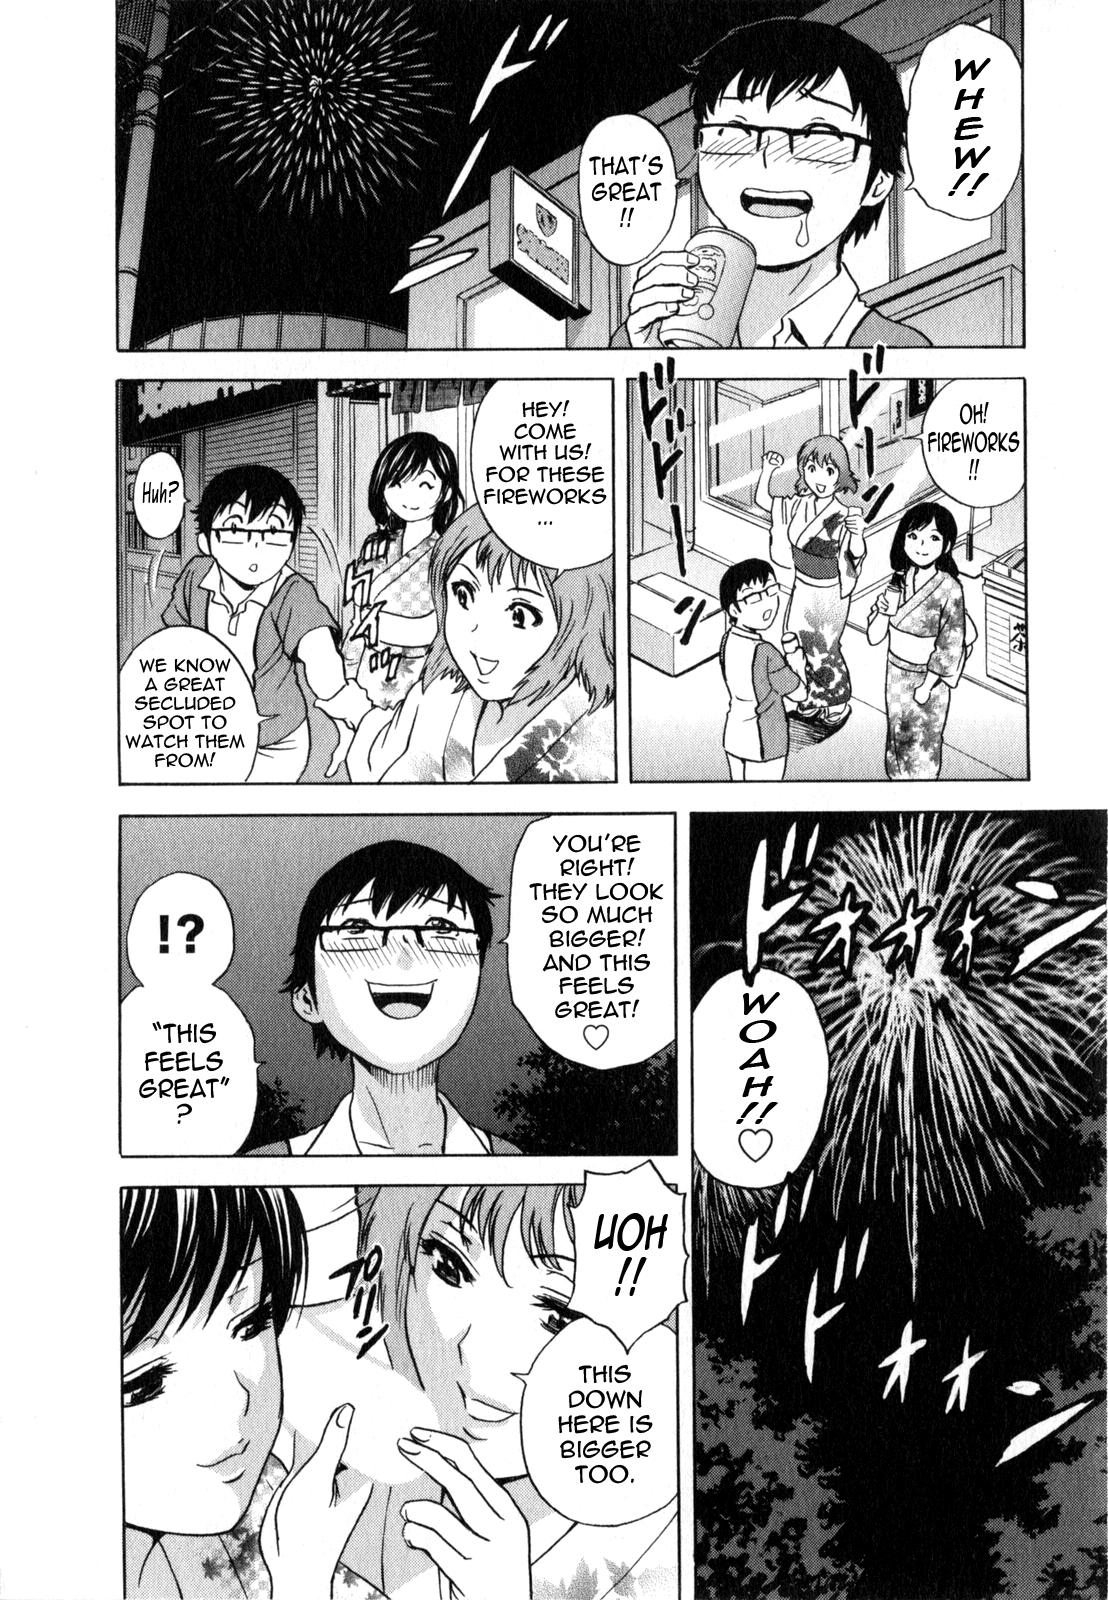 [Hidemaru] Life with Married Women Just Like a Manga 2 - Ch. 1-8 [English] {Tadanohito} 152